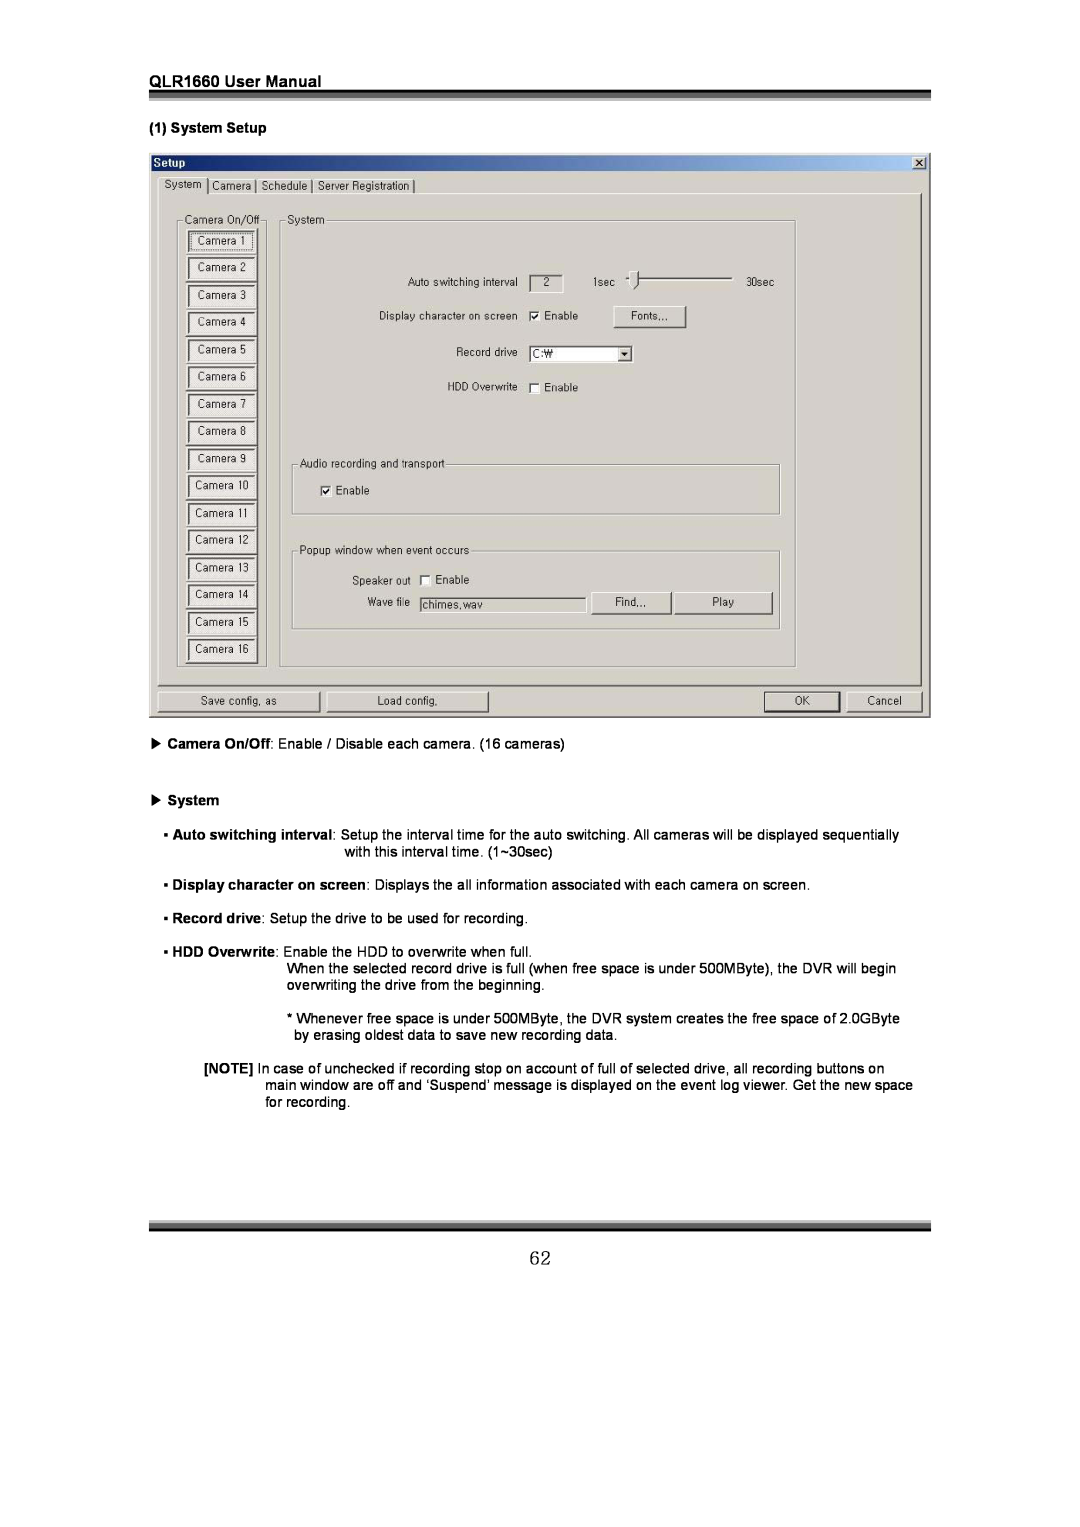 LOREX Technology instruction manual System Setup, QLR1660 User Manual 